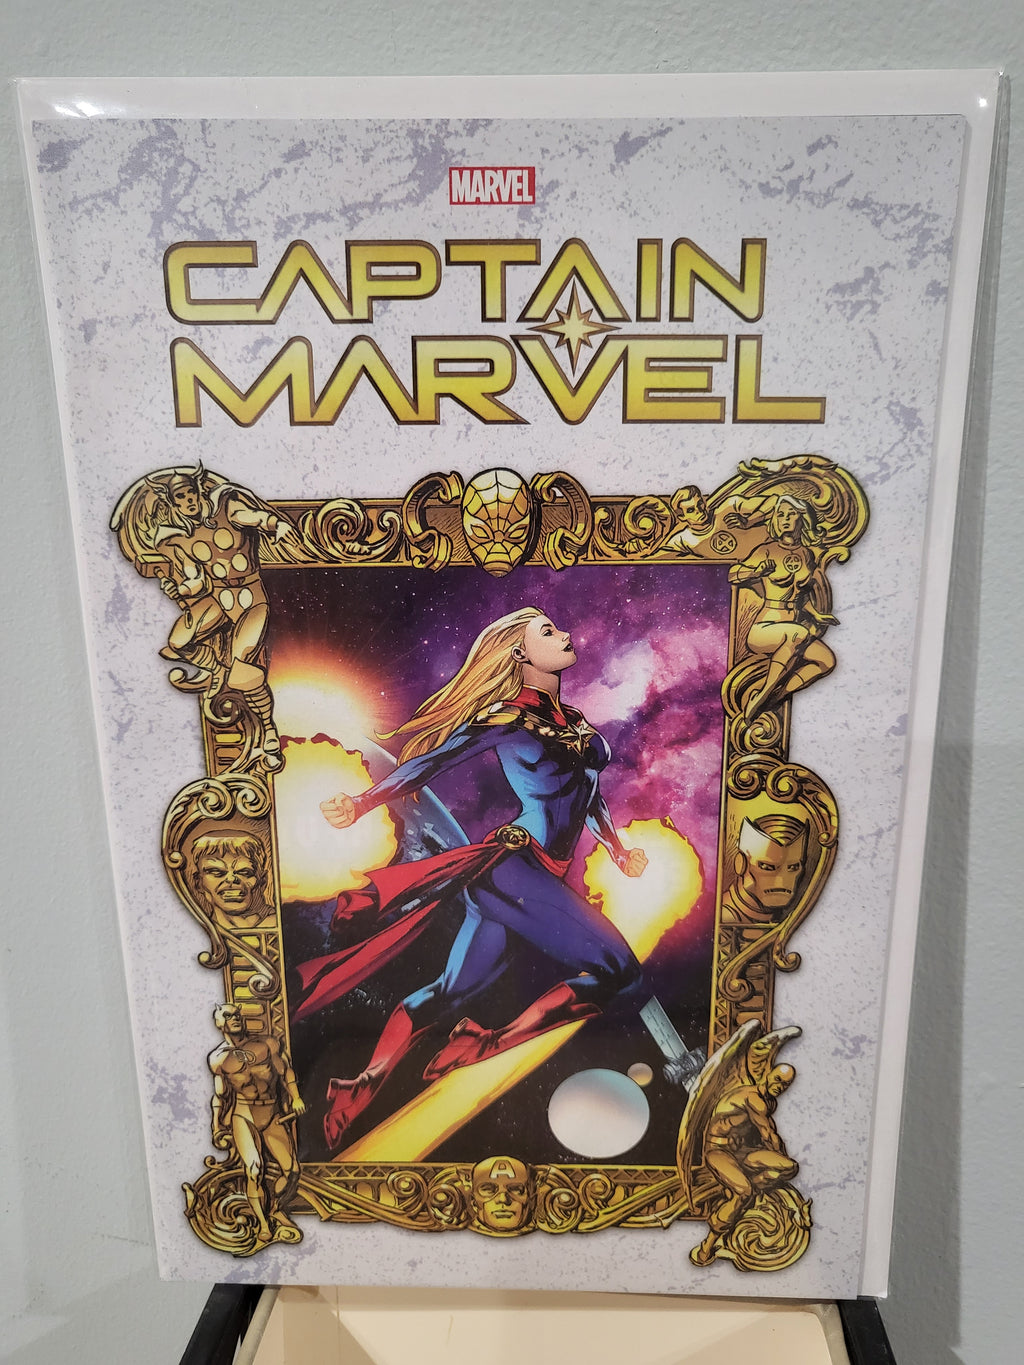 Captain Marvel #26 Emanuela Lupacchino Masterworks Variant Cover (2021) Comicbook